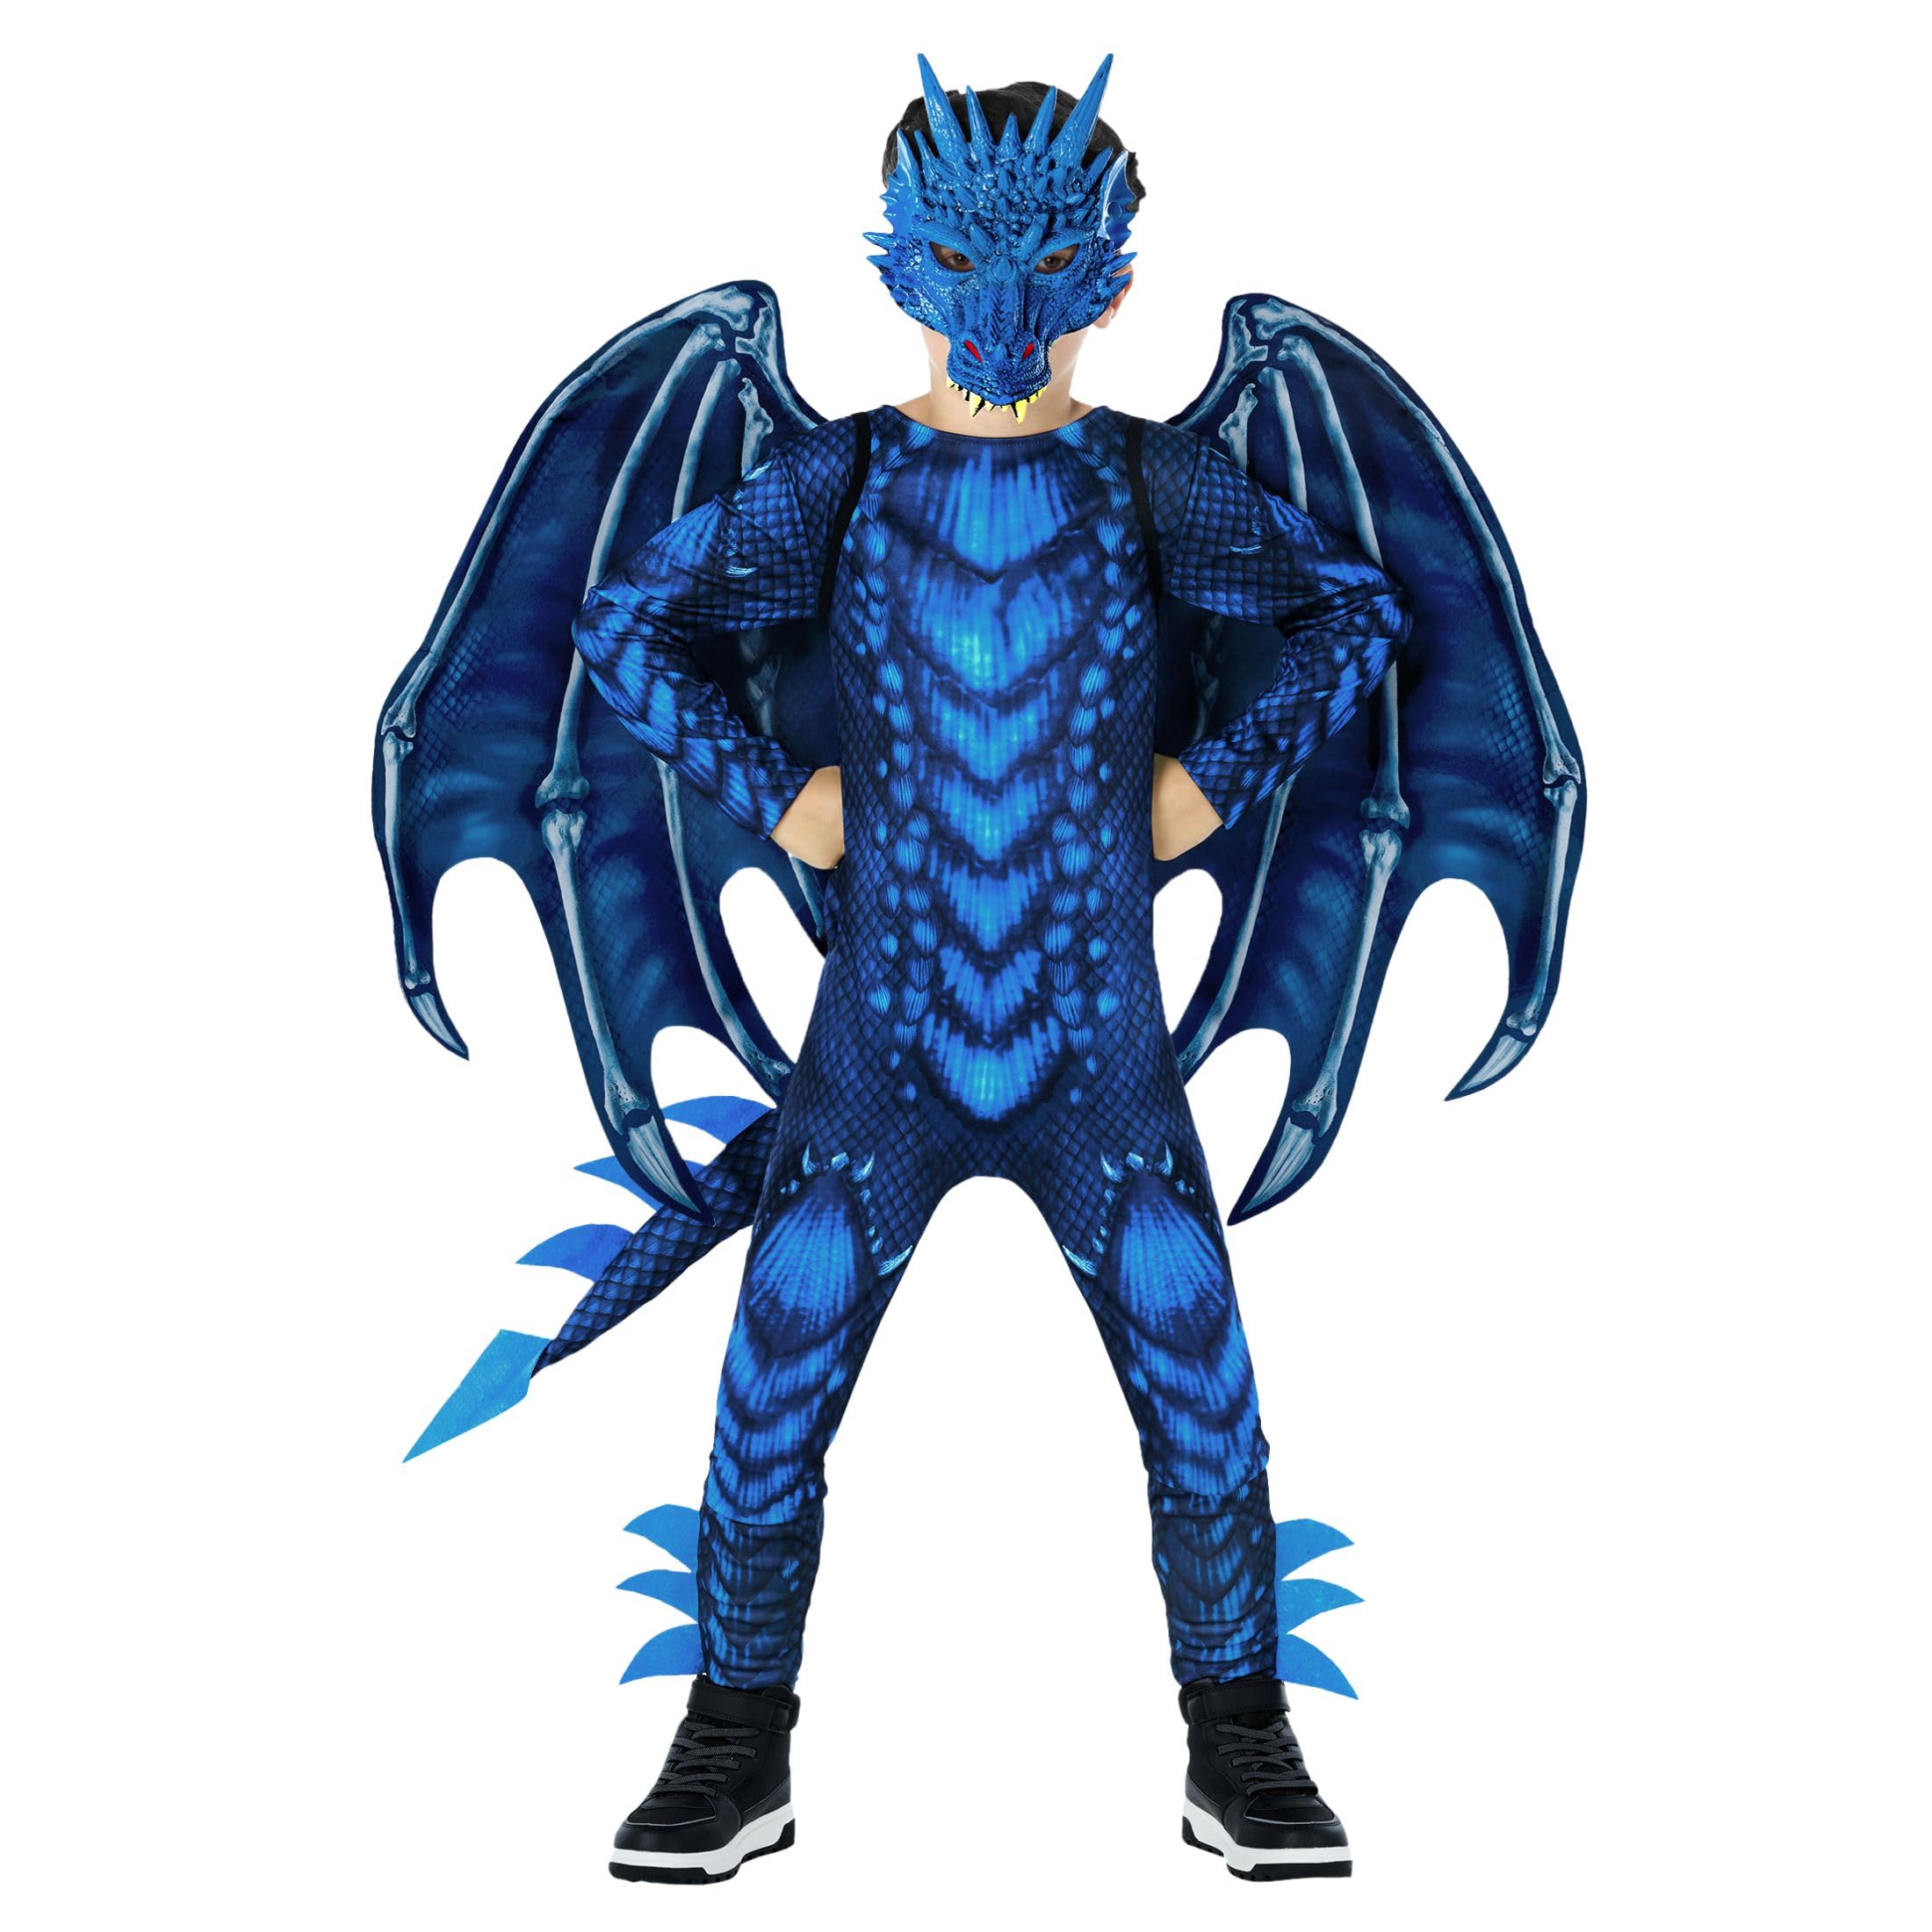 Morph Blue Dragon Costume Kids Dragon Costumes For Boys Halloween Costumes For Boys Kids Dragon Costume Boys Dragon Costume Kids